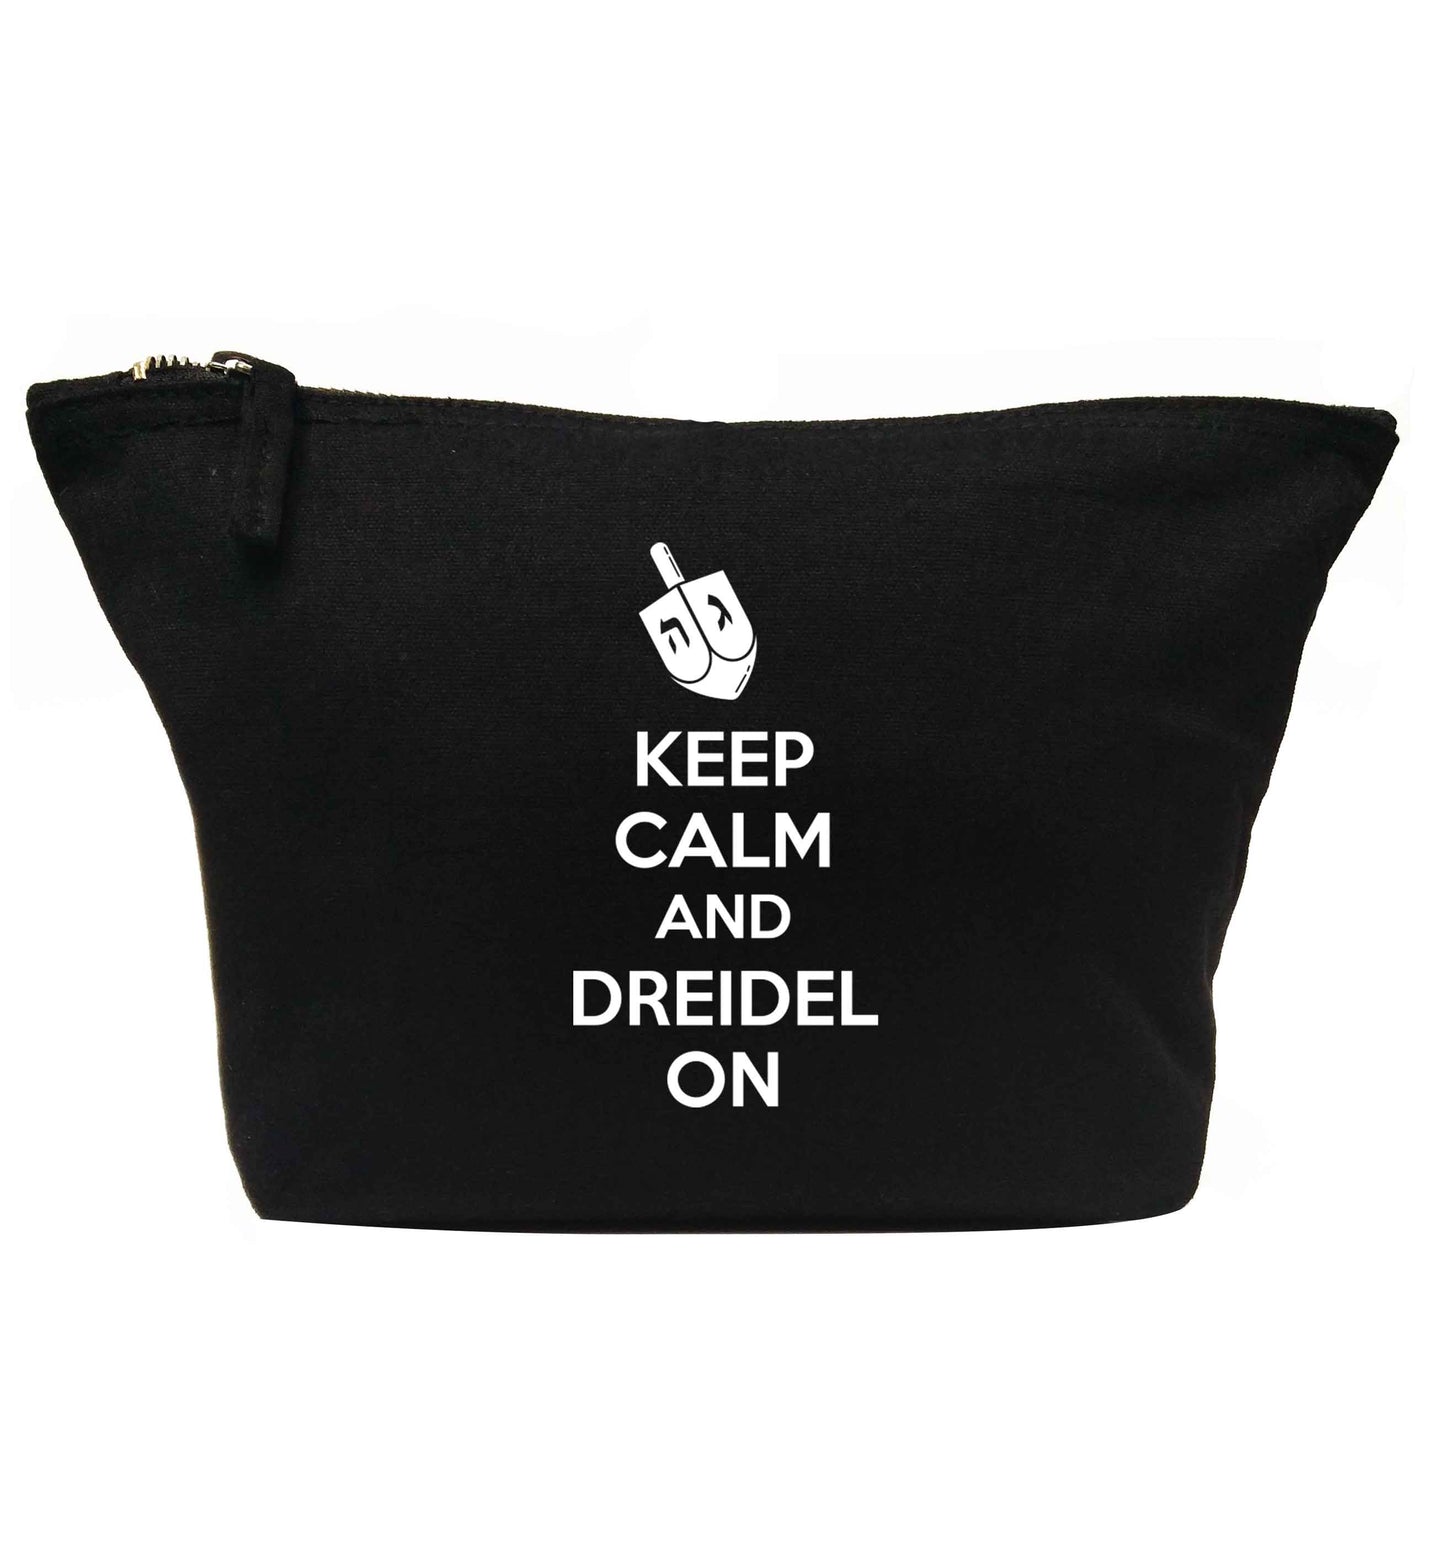 Keep calm and dreidel on | Makeup / wash bag